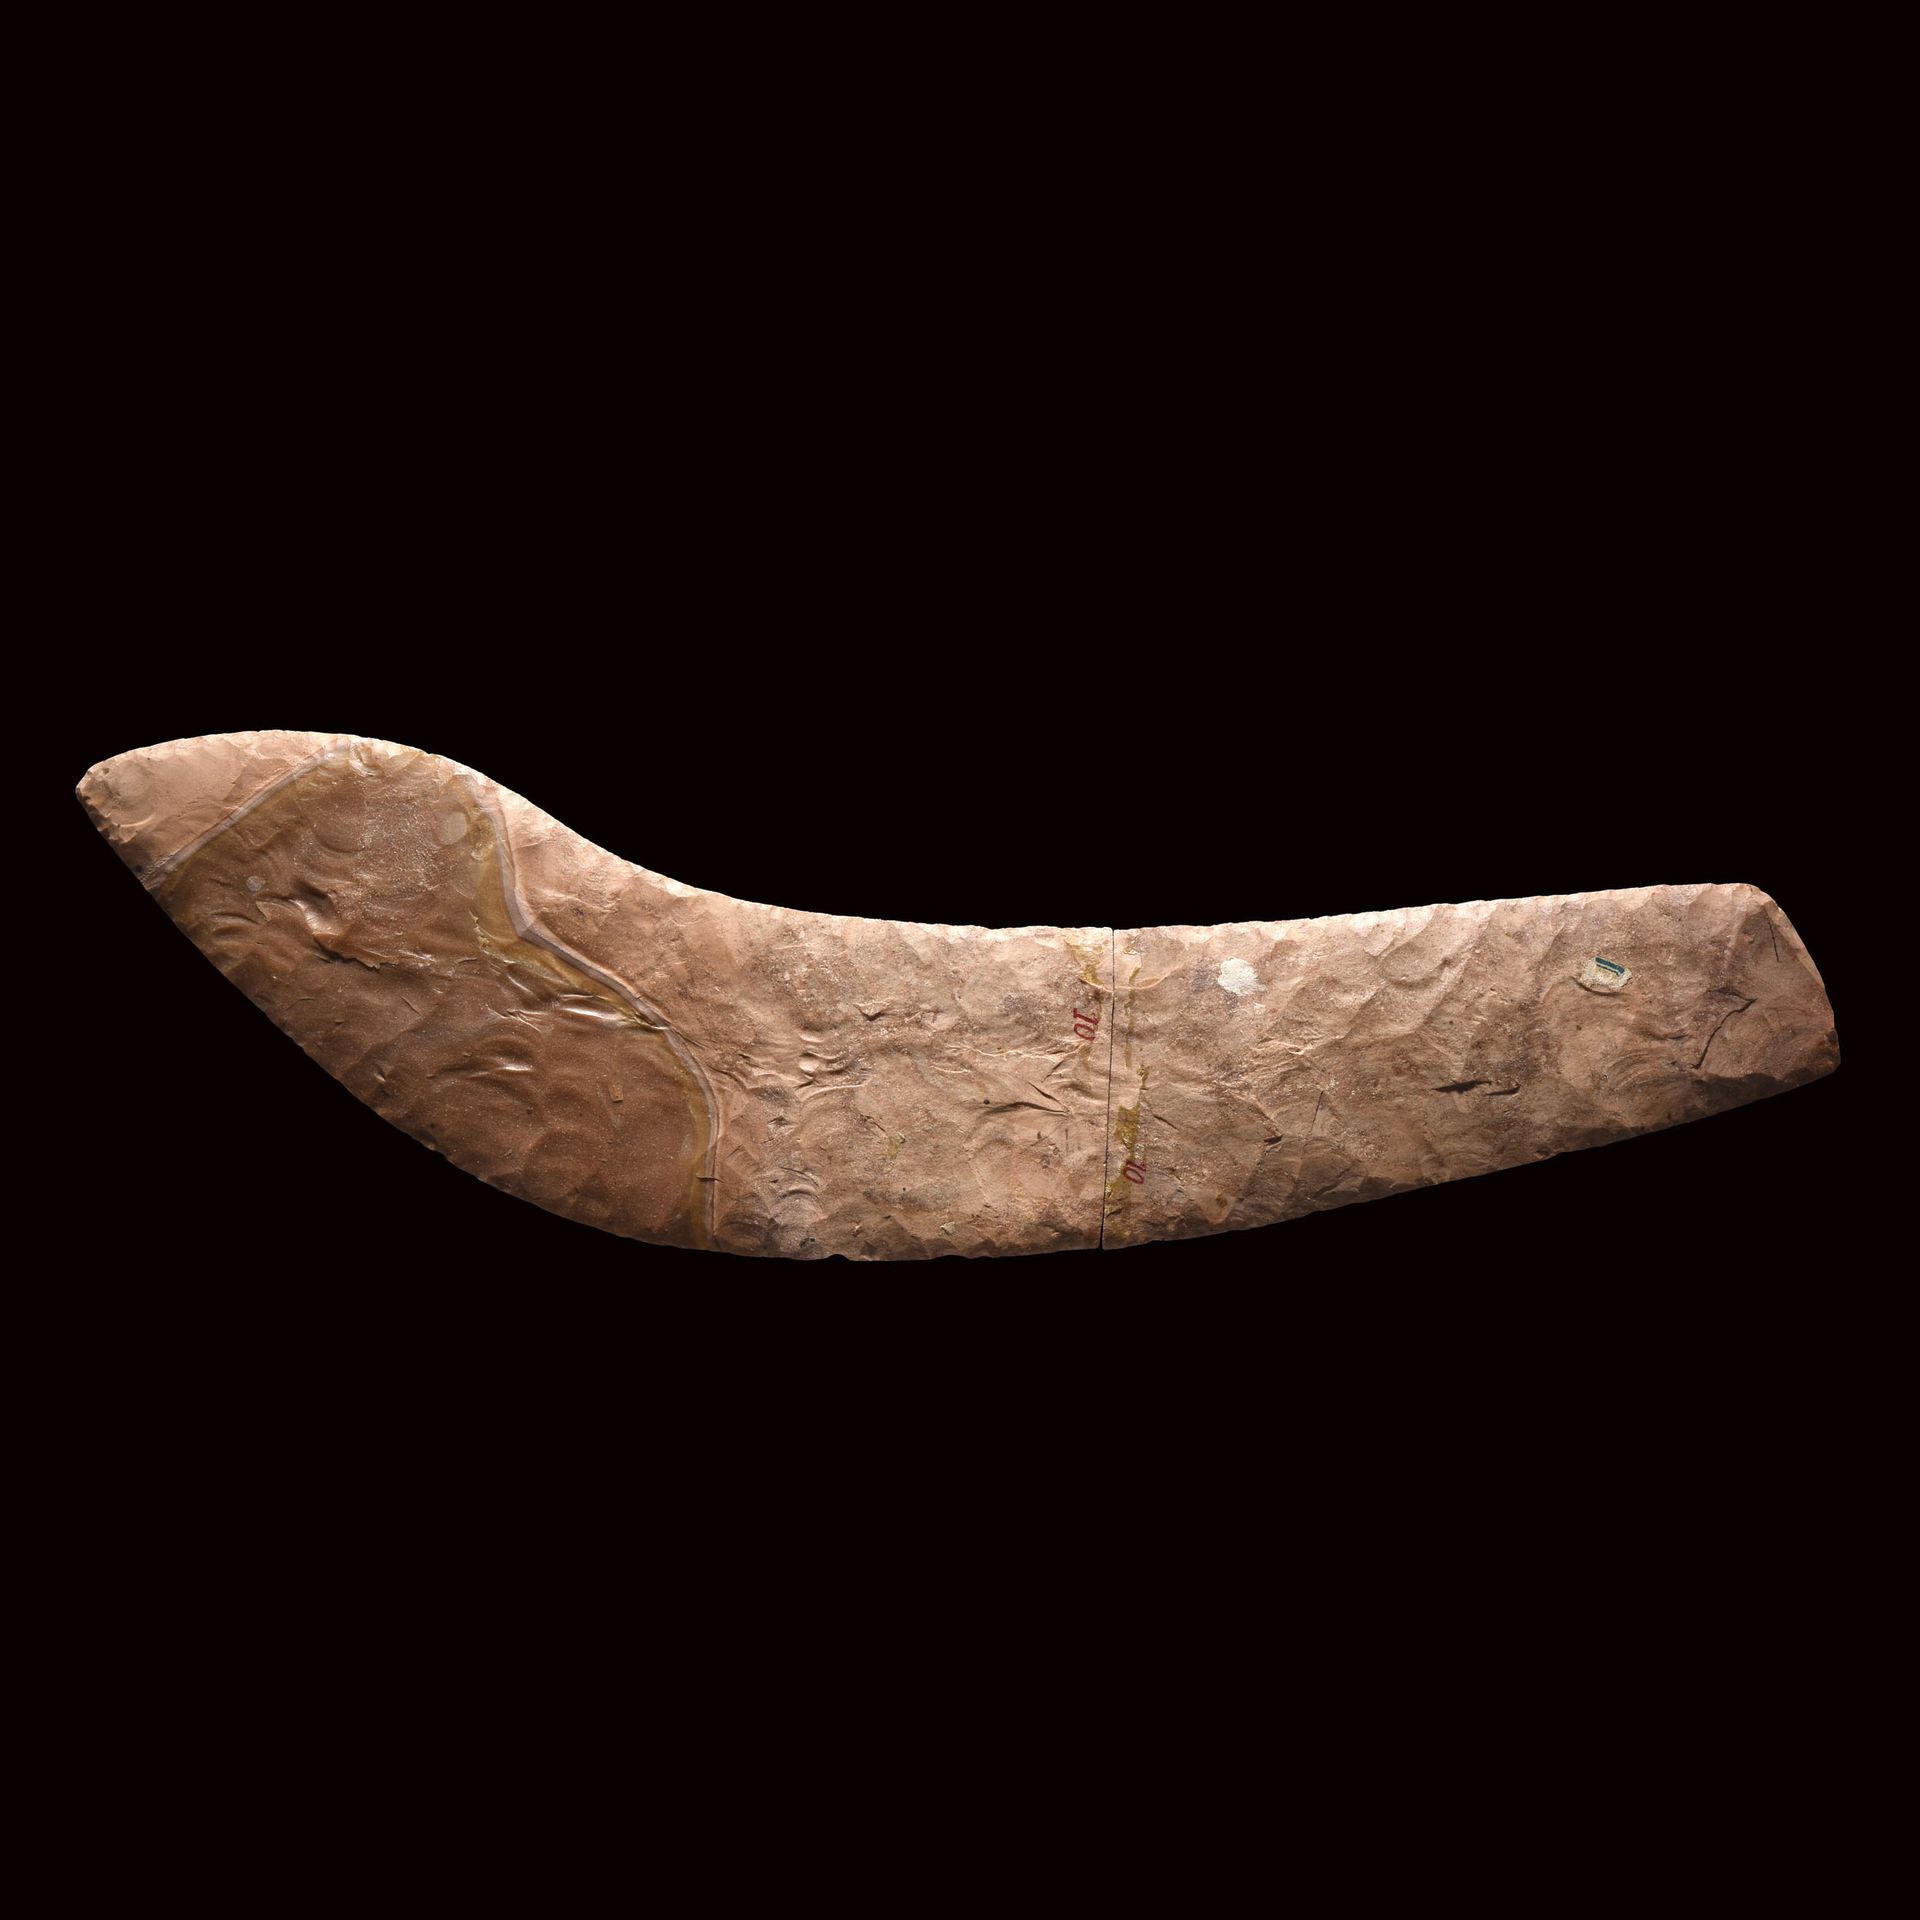 Null 刀刃

埃及，Naqada III，约公元前3200-3000年

弗林特。分为两部分。每个部件上都有红色墨水的库存编号 "10"。

有一个旧的收藏&hellip;